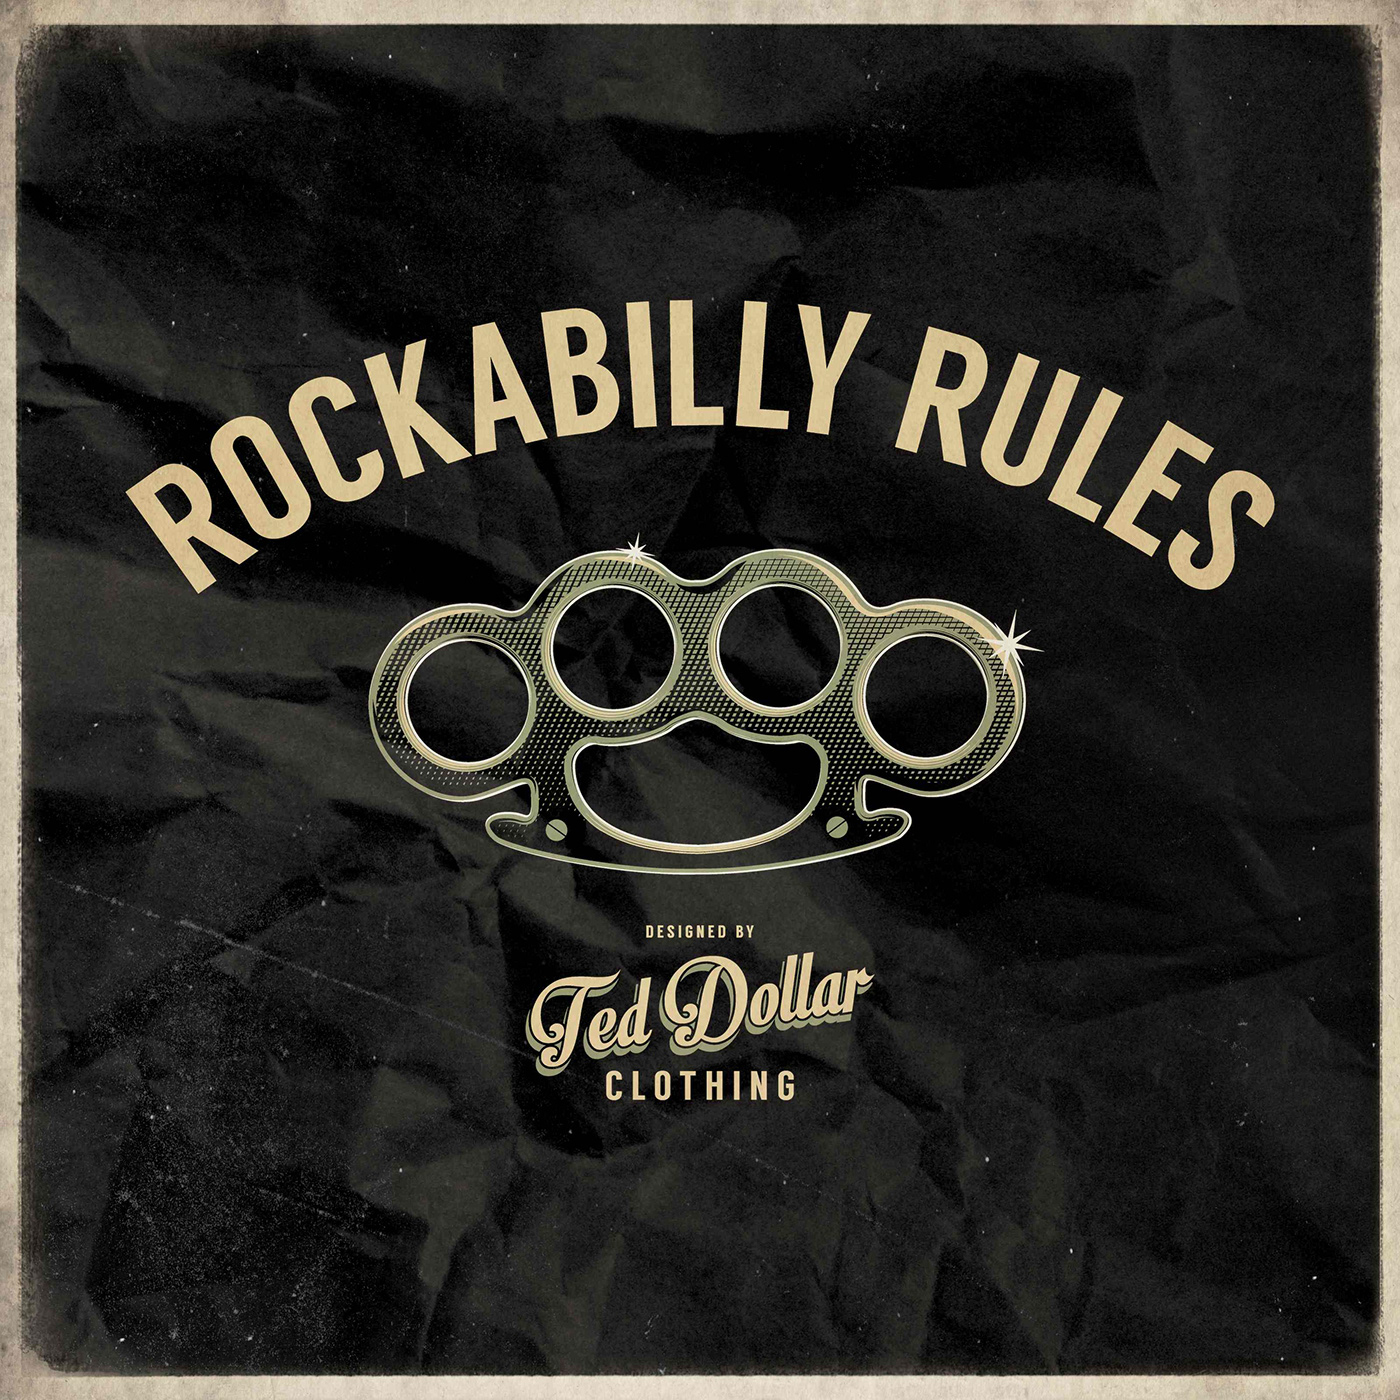 Rockabilly Rules on Behance